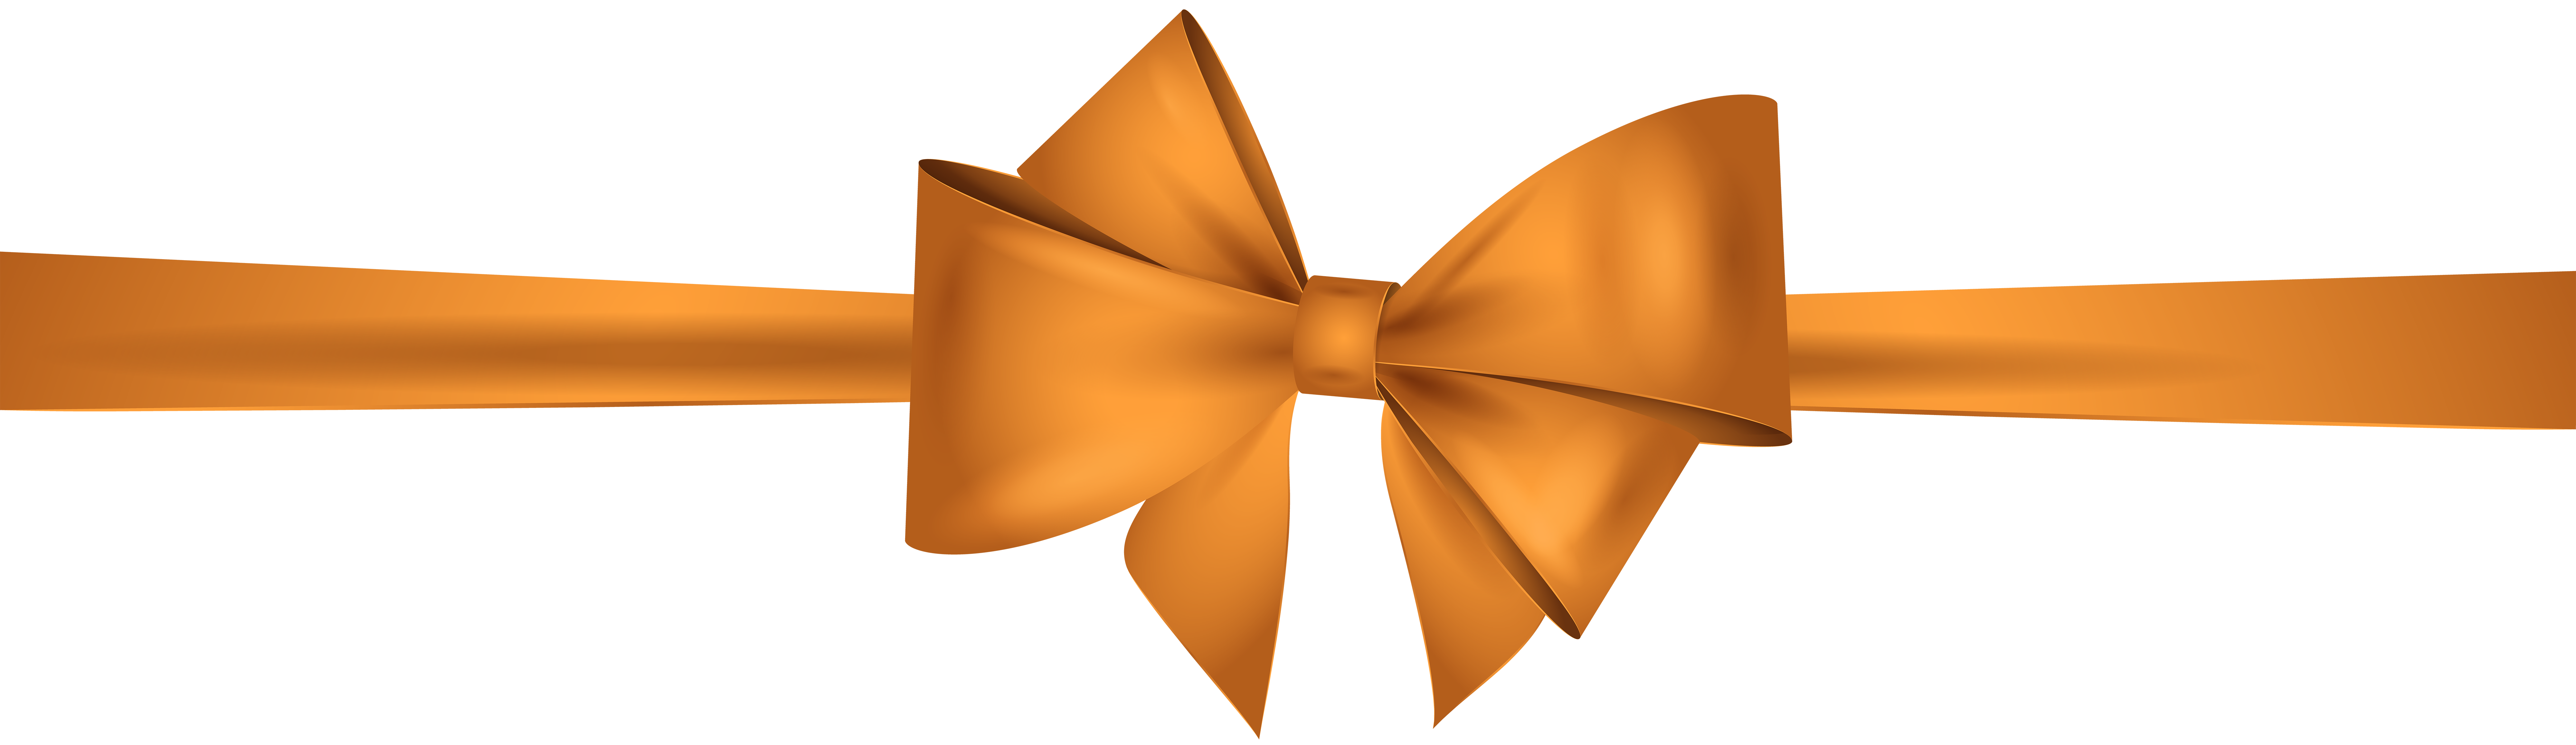 orange clipart bow tie